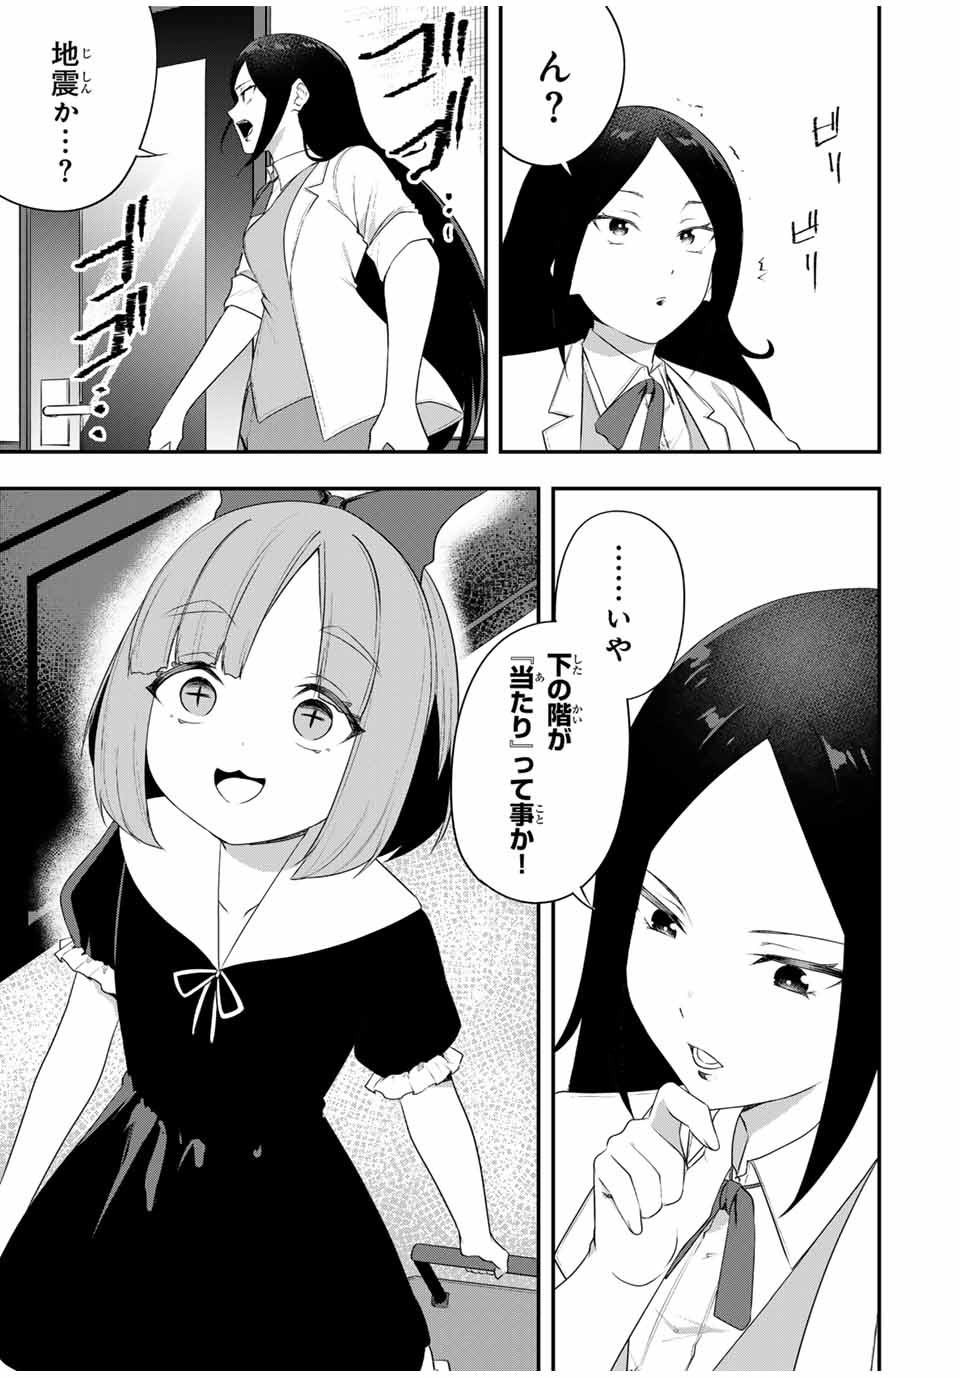 Heroine wa xx Okasegitai - Chapter 14 - Page 5